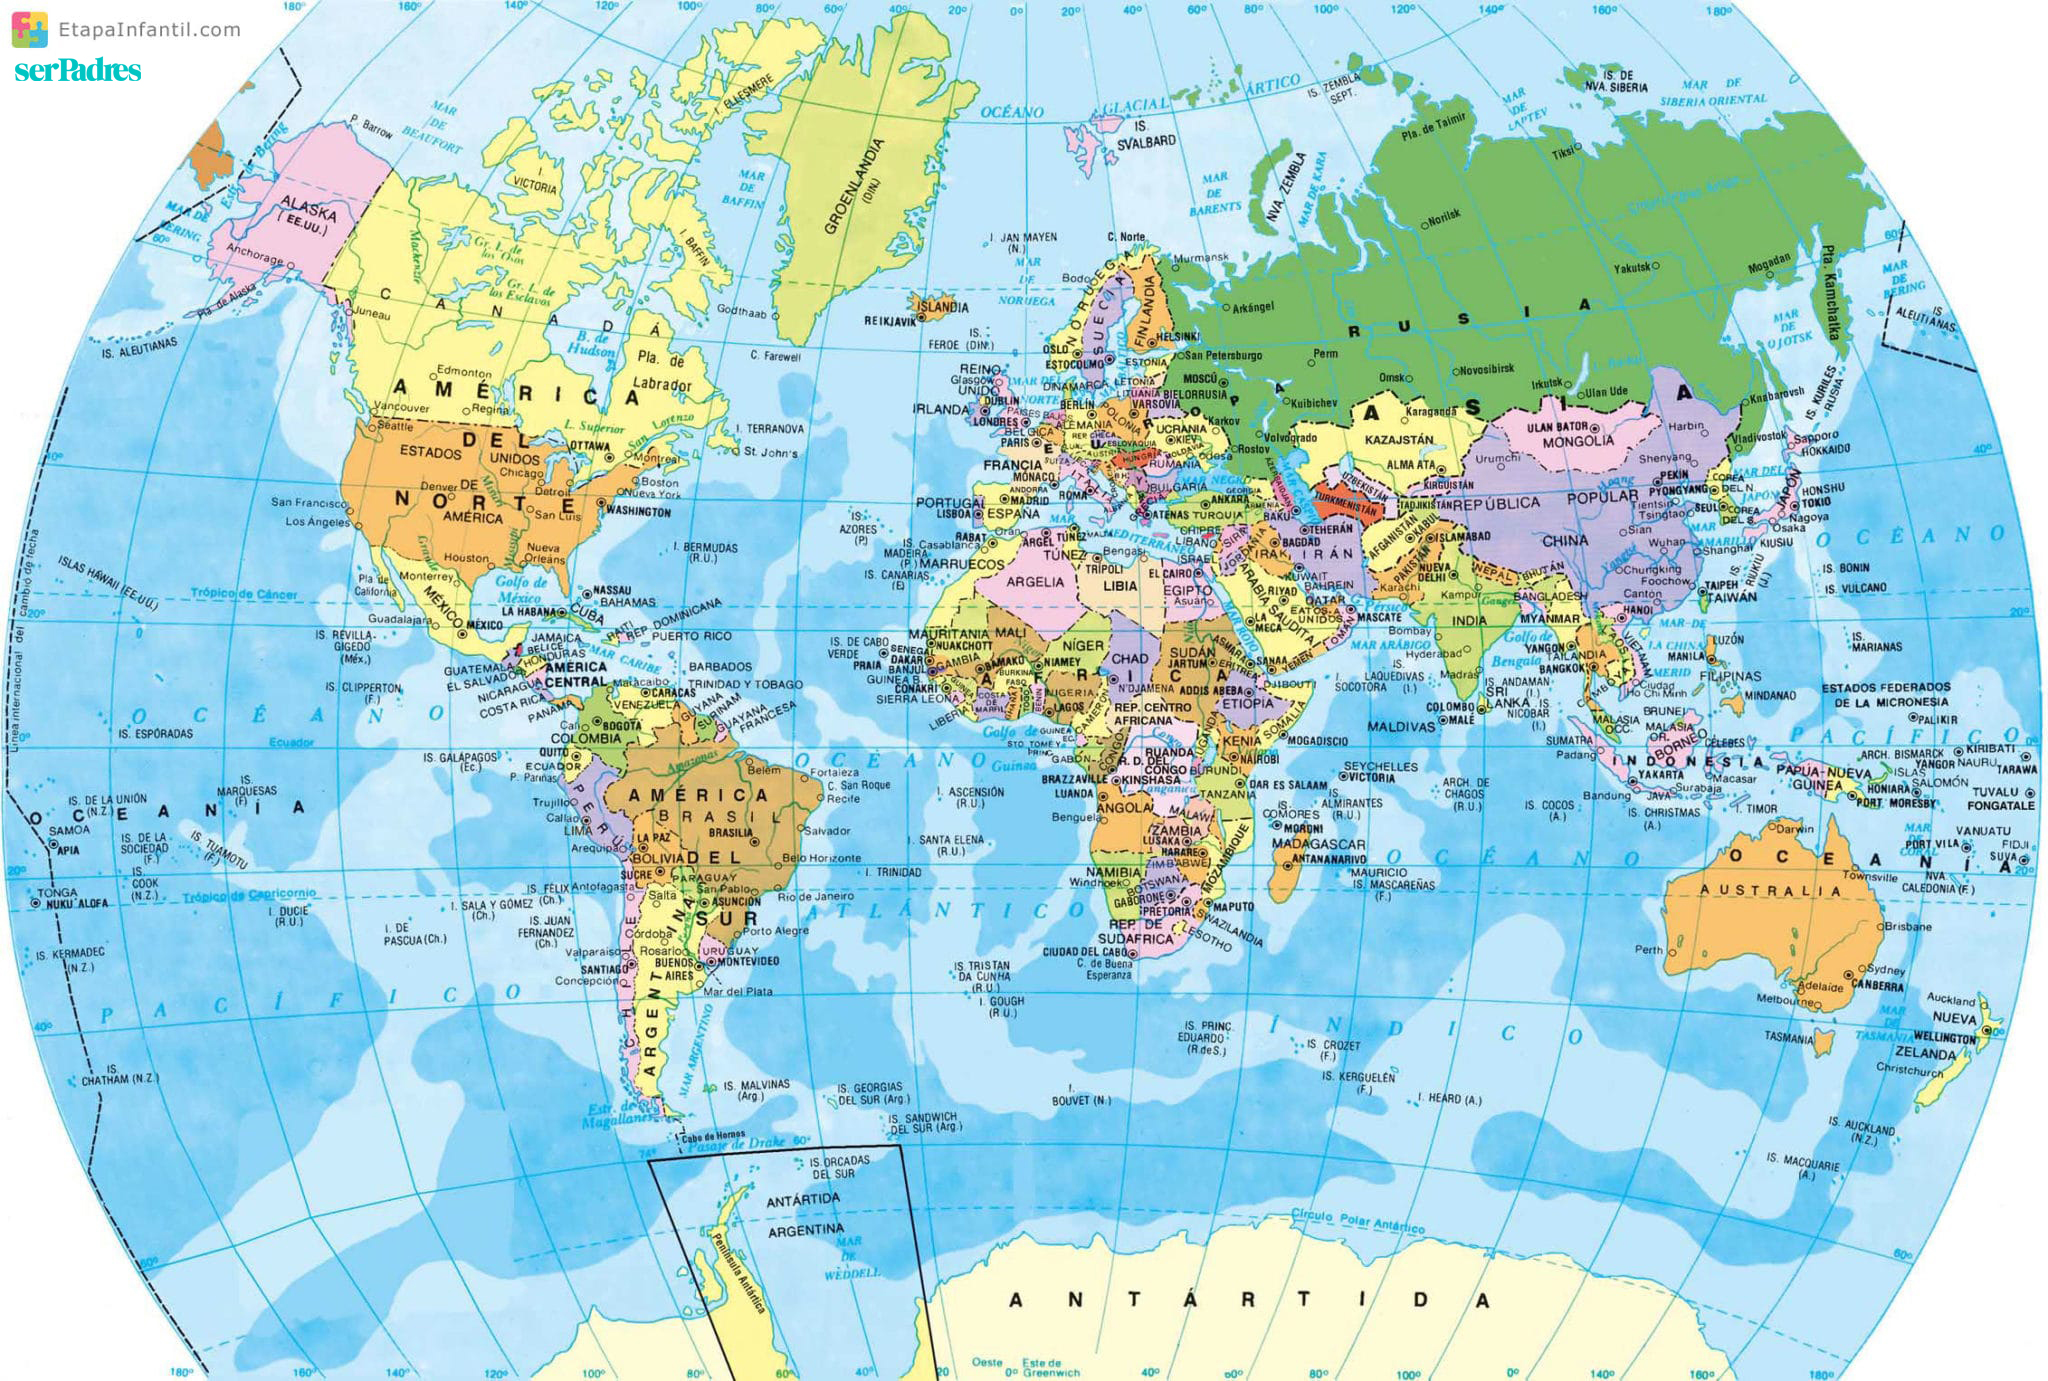 Cómo dibujar un MAPA DEL MUNDO o PLANETA TIERRA / How to draw a WORLD MAP 